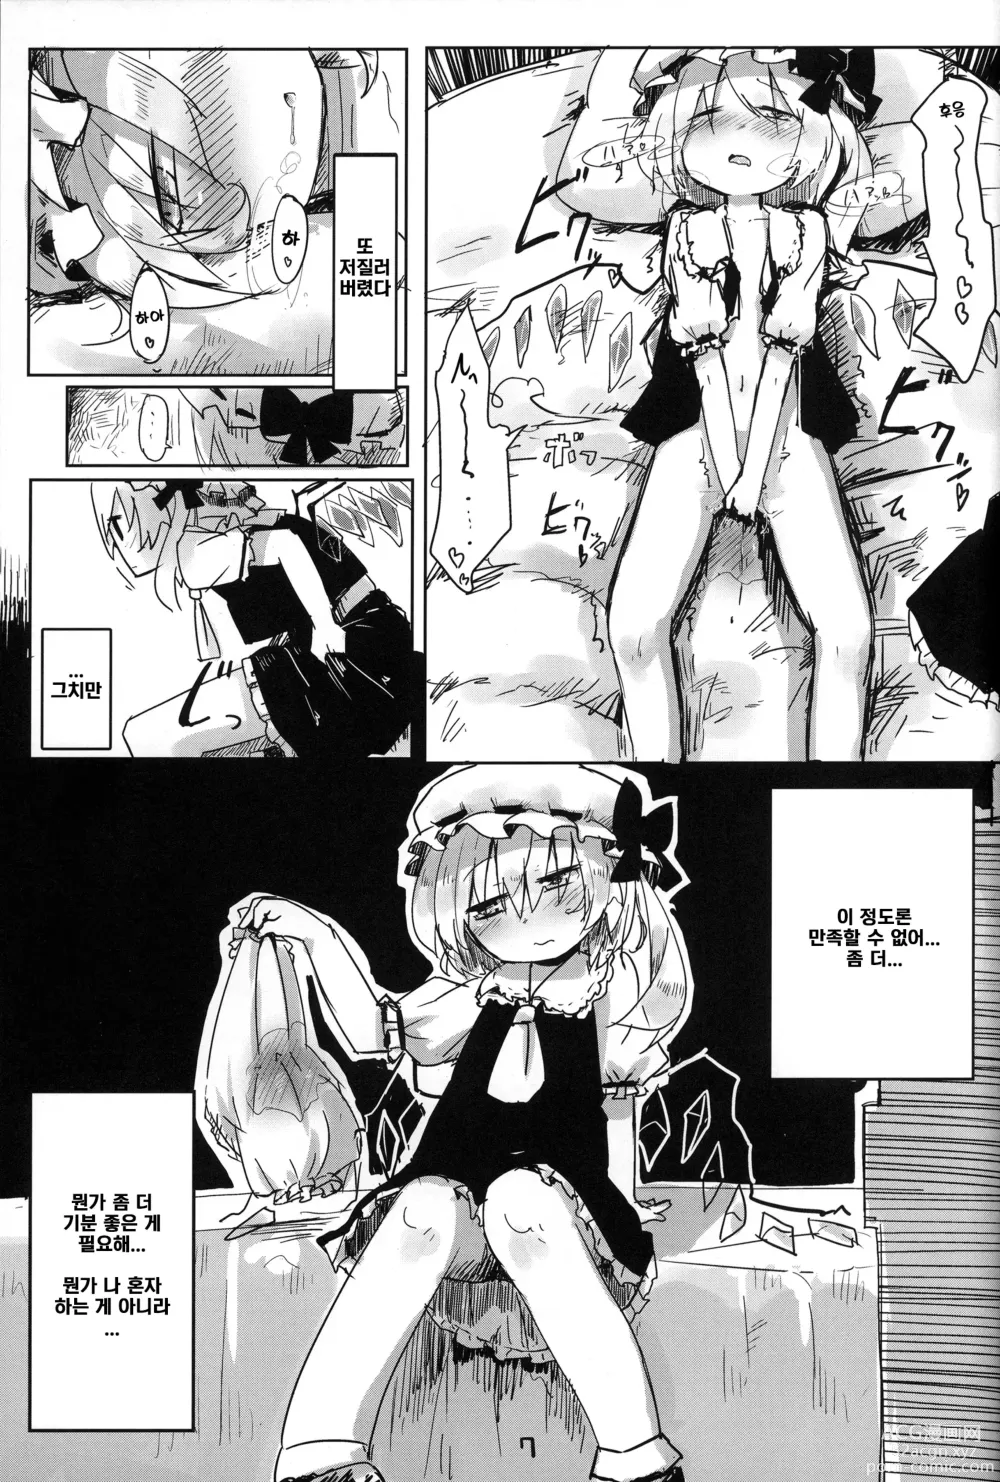 Page 8 of doujinshi 03.1 Curiosity of Pleasure